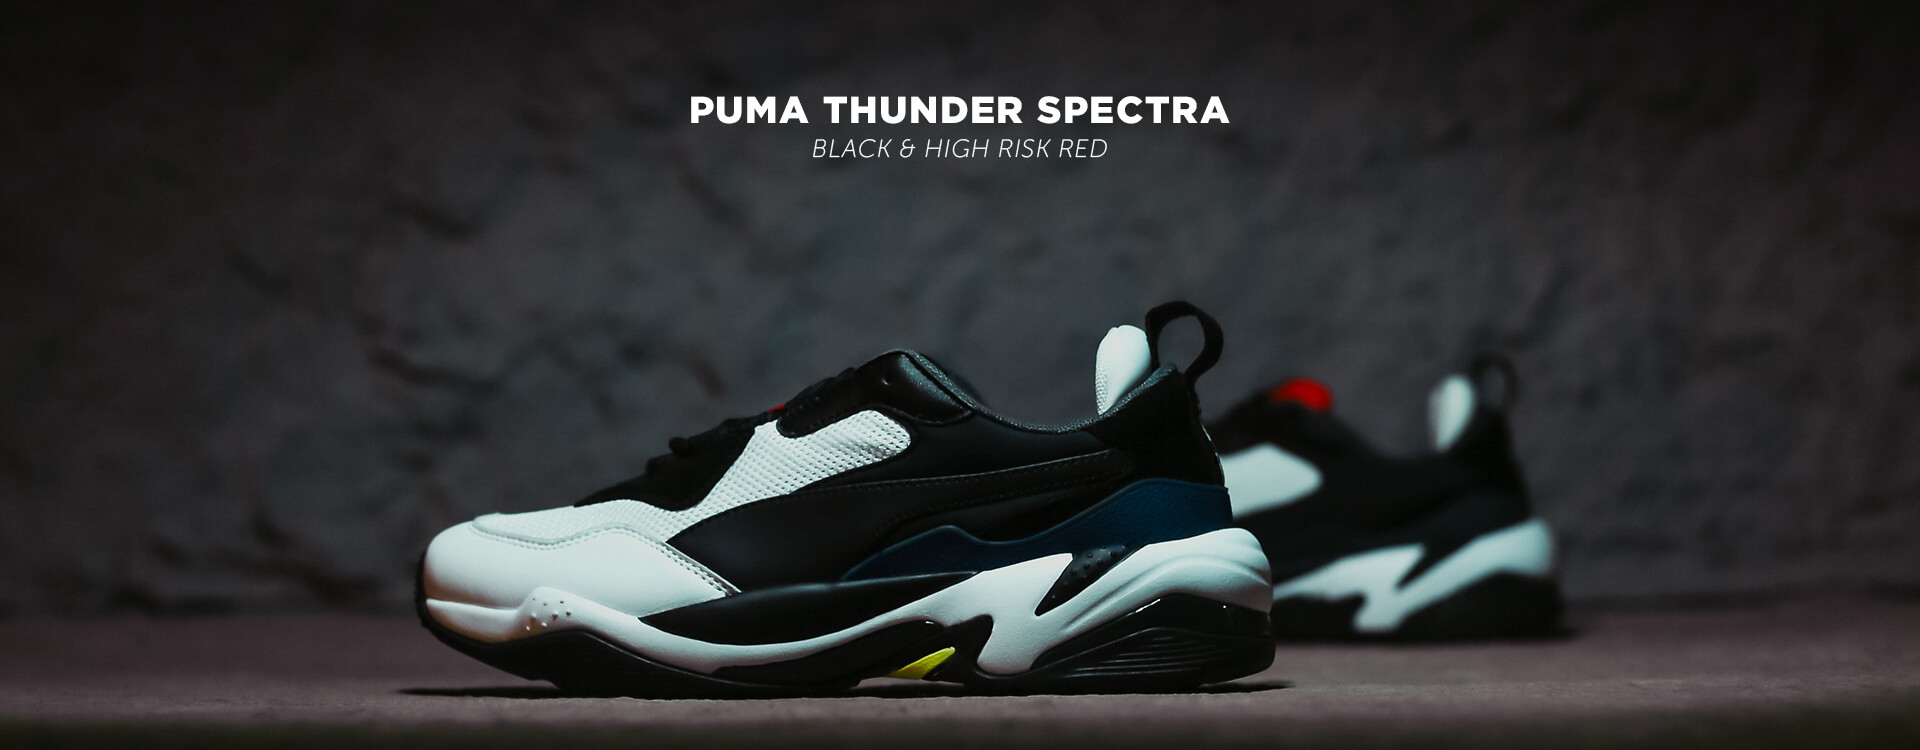 Puma Thunder Spectra Black & High Risk Red